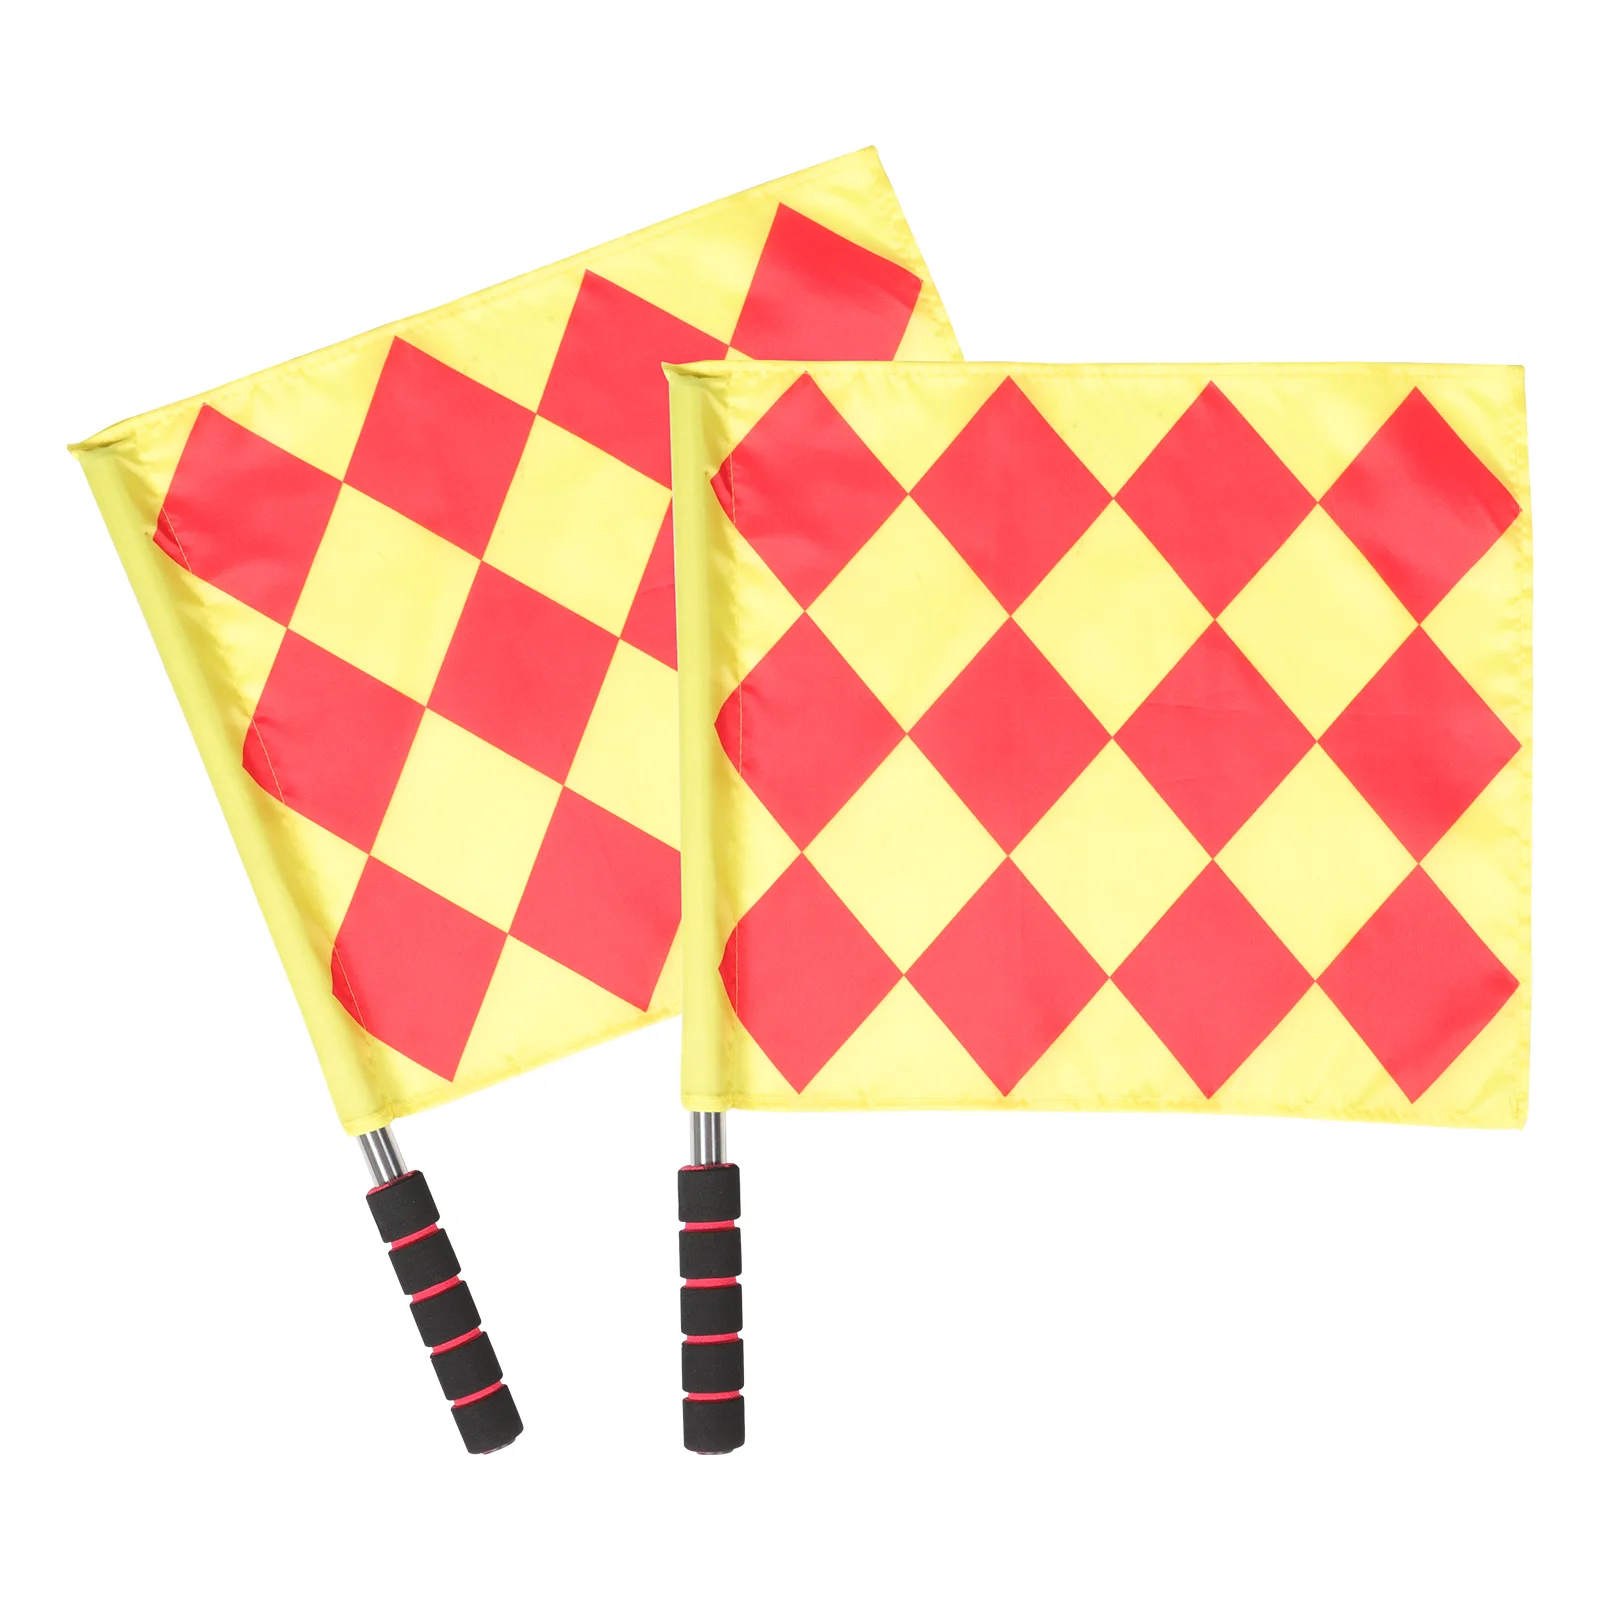 

2 Pcs Football Referee Flag Commanding Waving For Racing Conducting Orange Warning Flags Hand Signal Soccer Traffic Banner